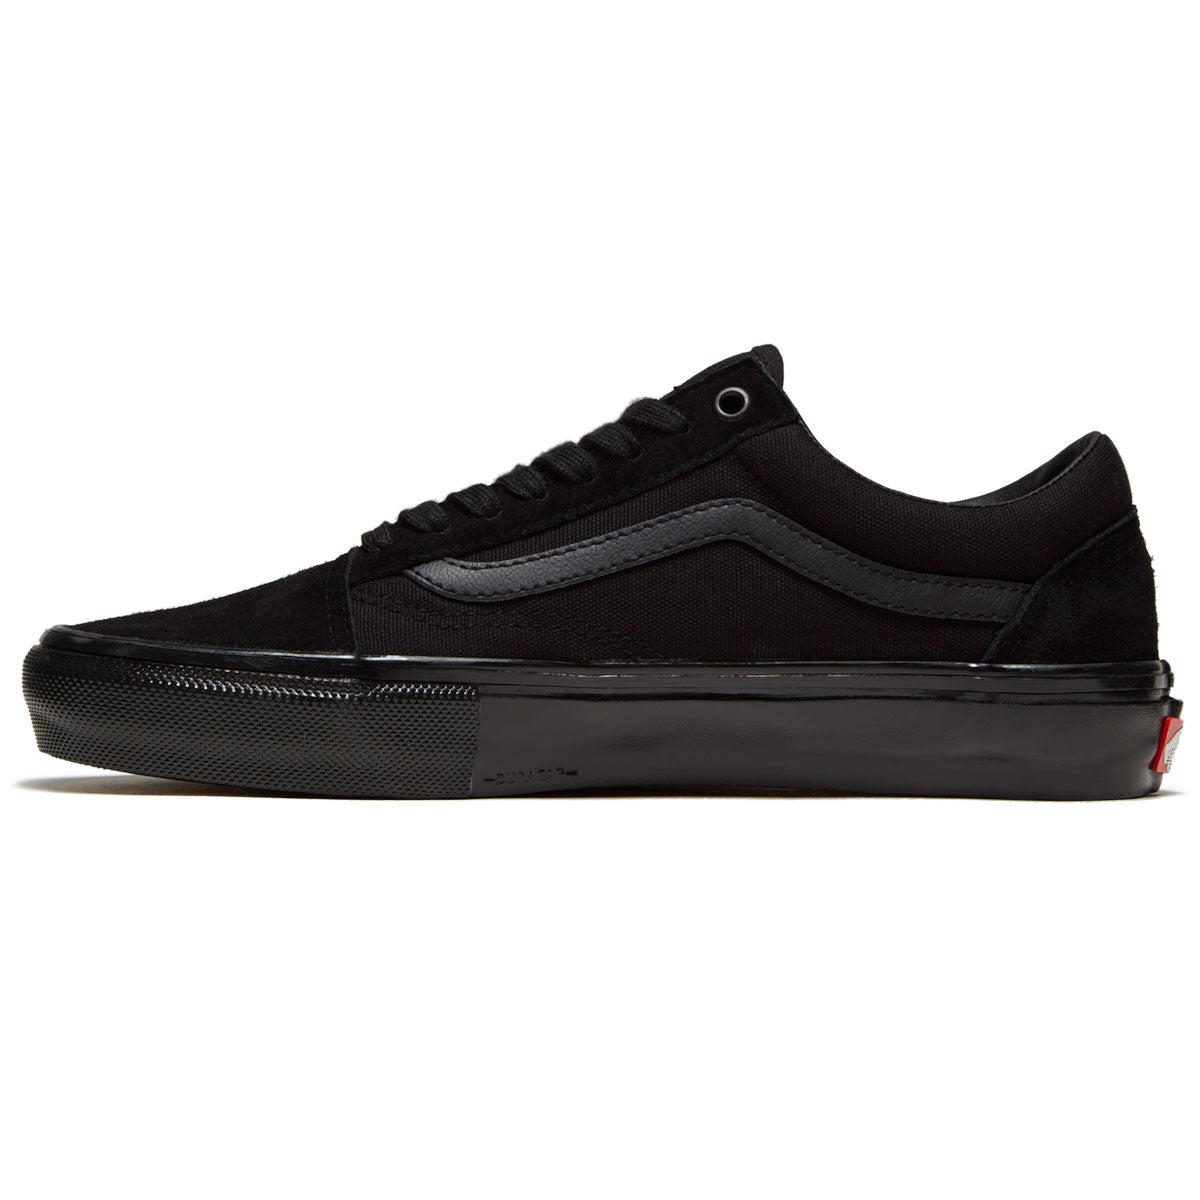 Vans Skate Old Skool Shoes - Black/Black image 2